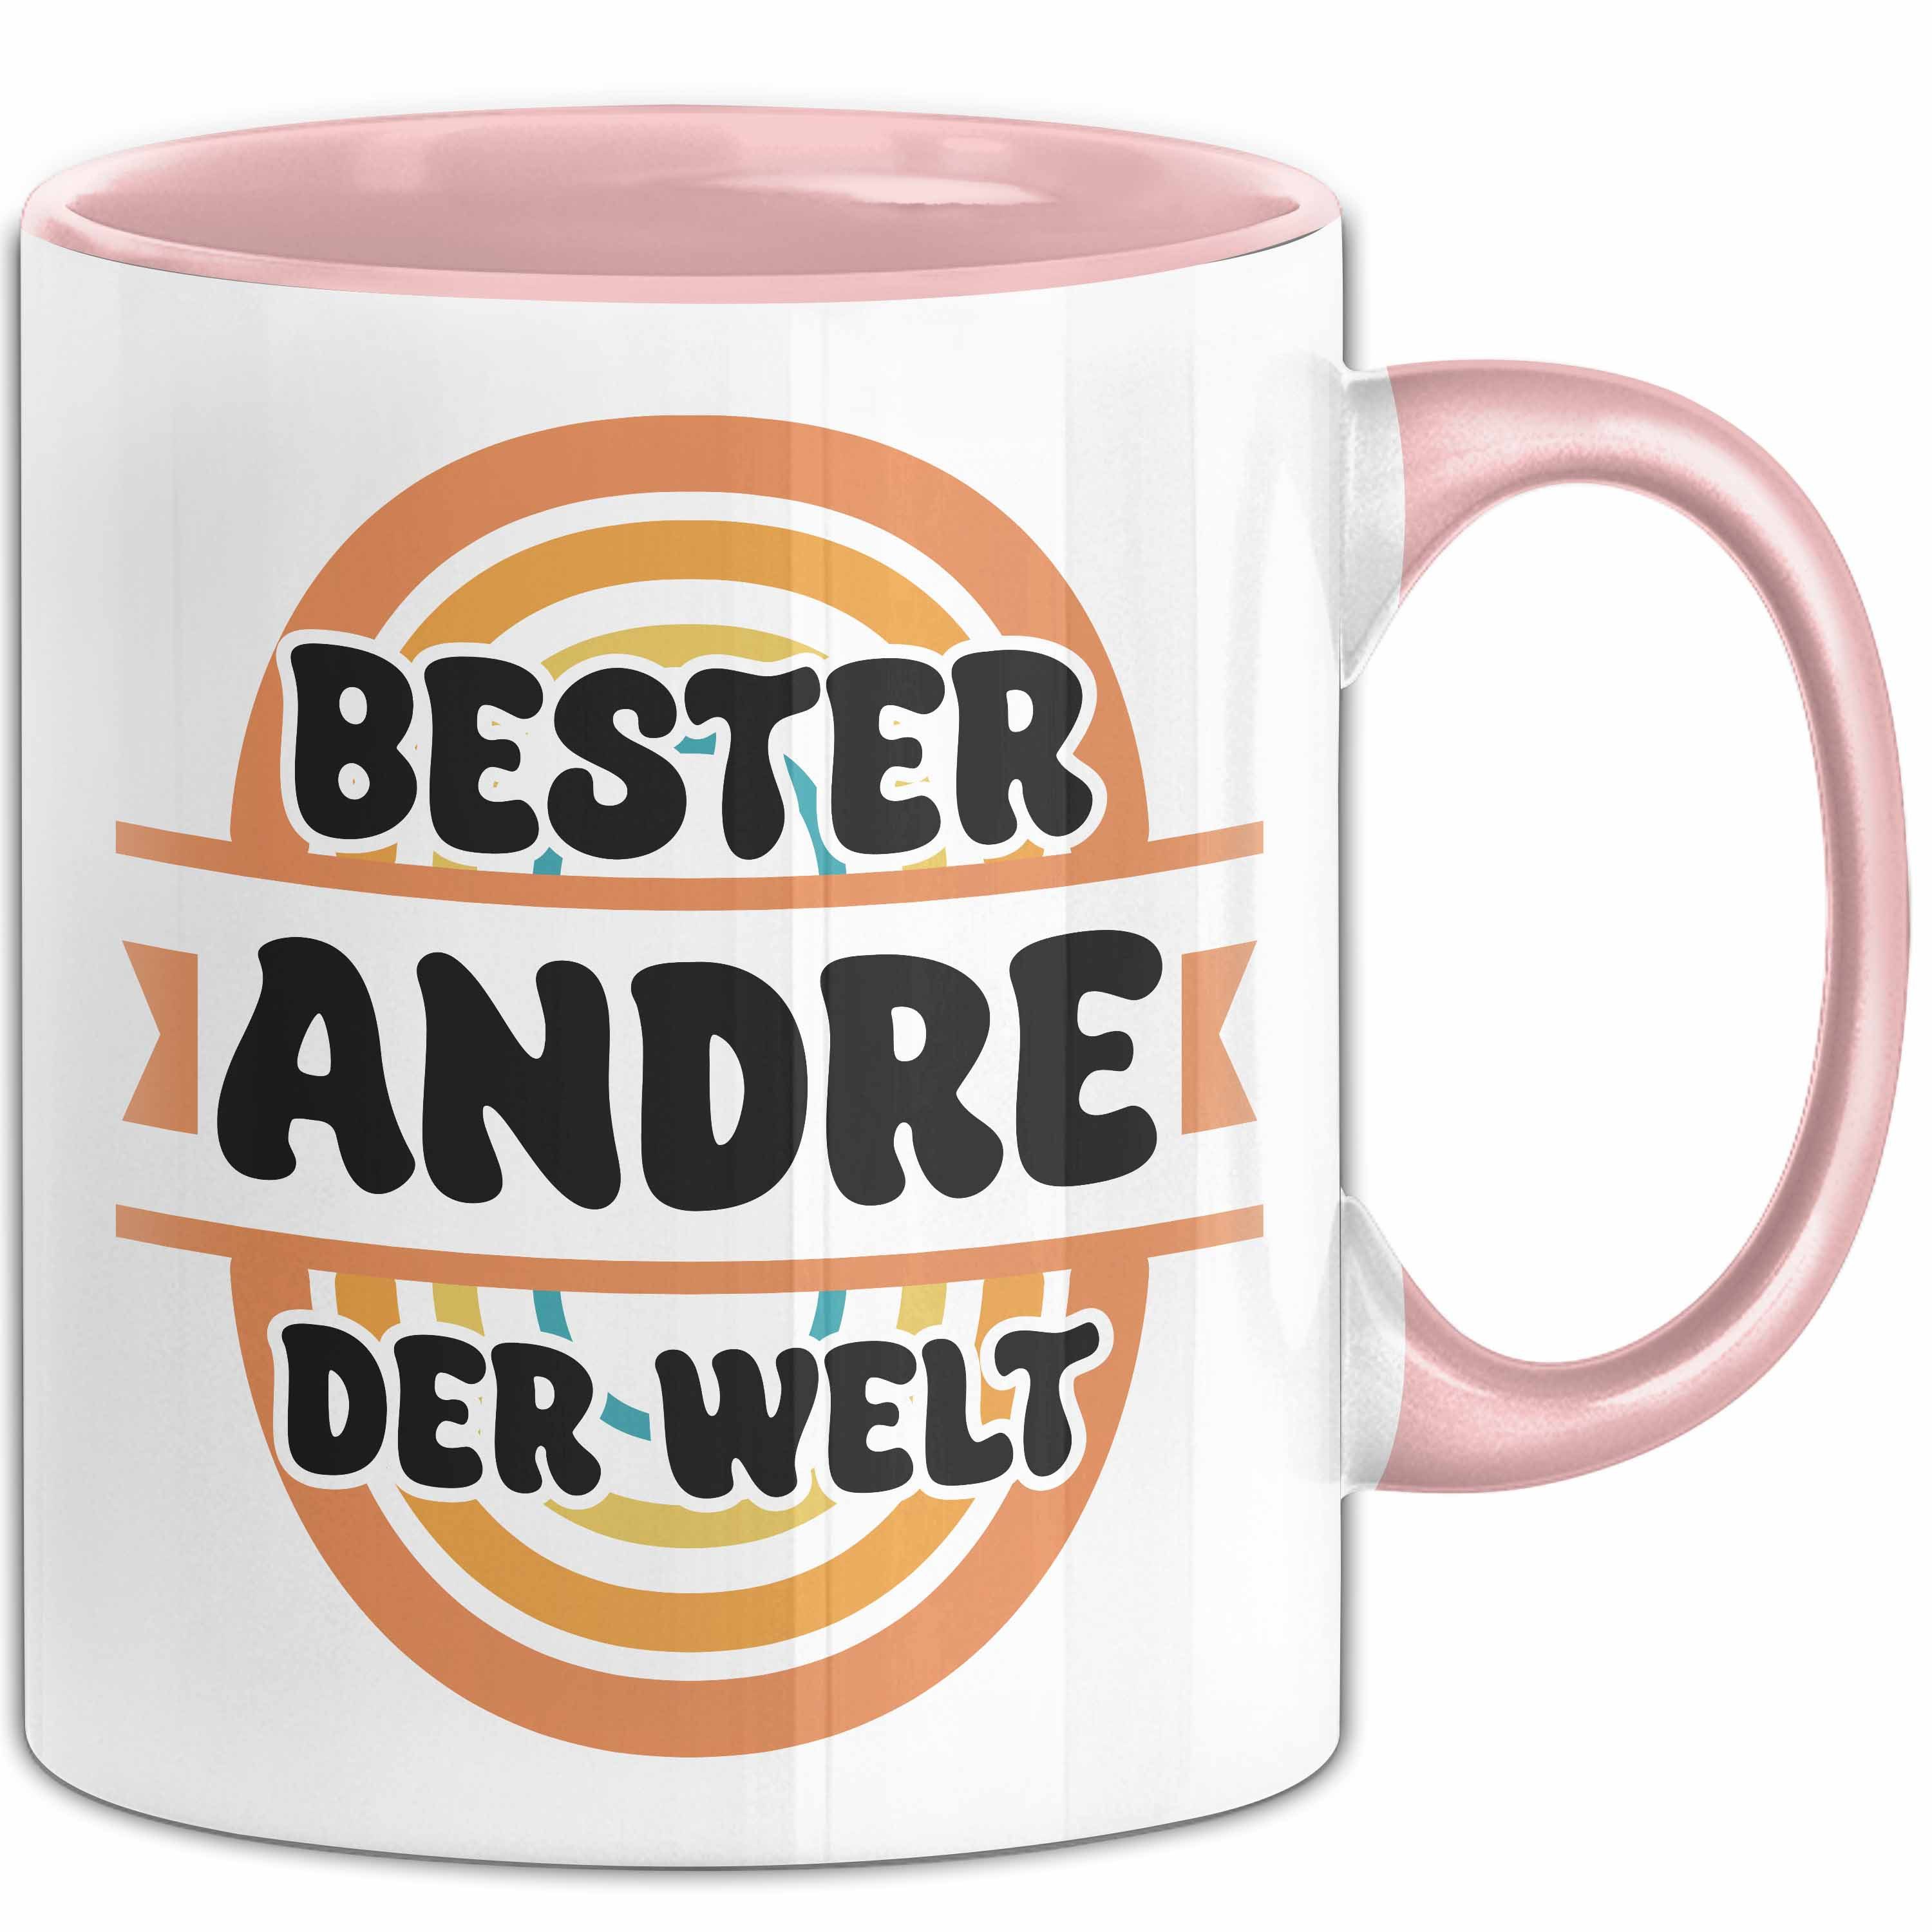 Trendation Tasse Andre Tasse Geschenk Name Bester Andre Der Welt Kaffee-Becher